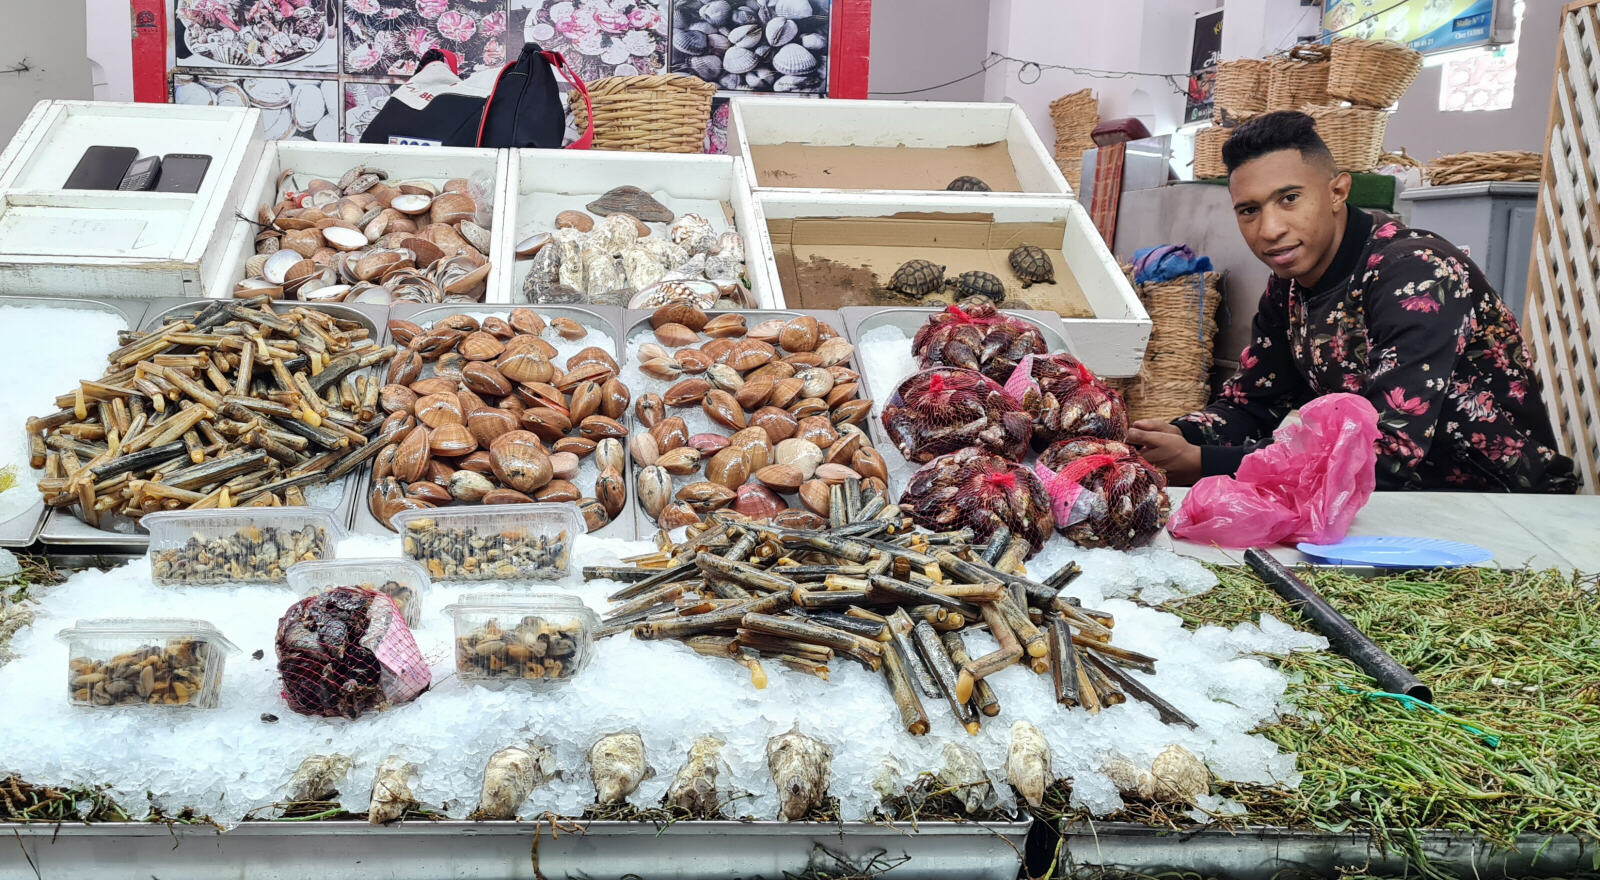 The fish market in Casablanca central market